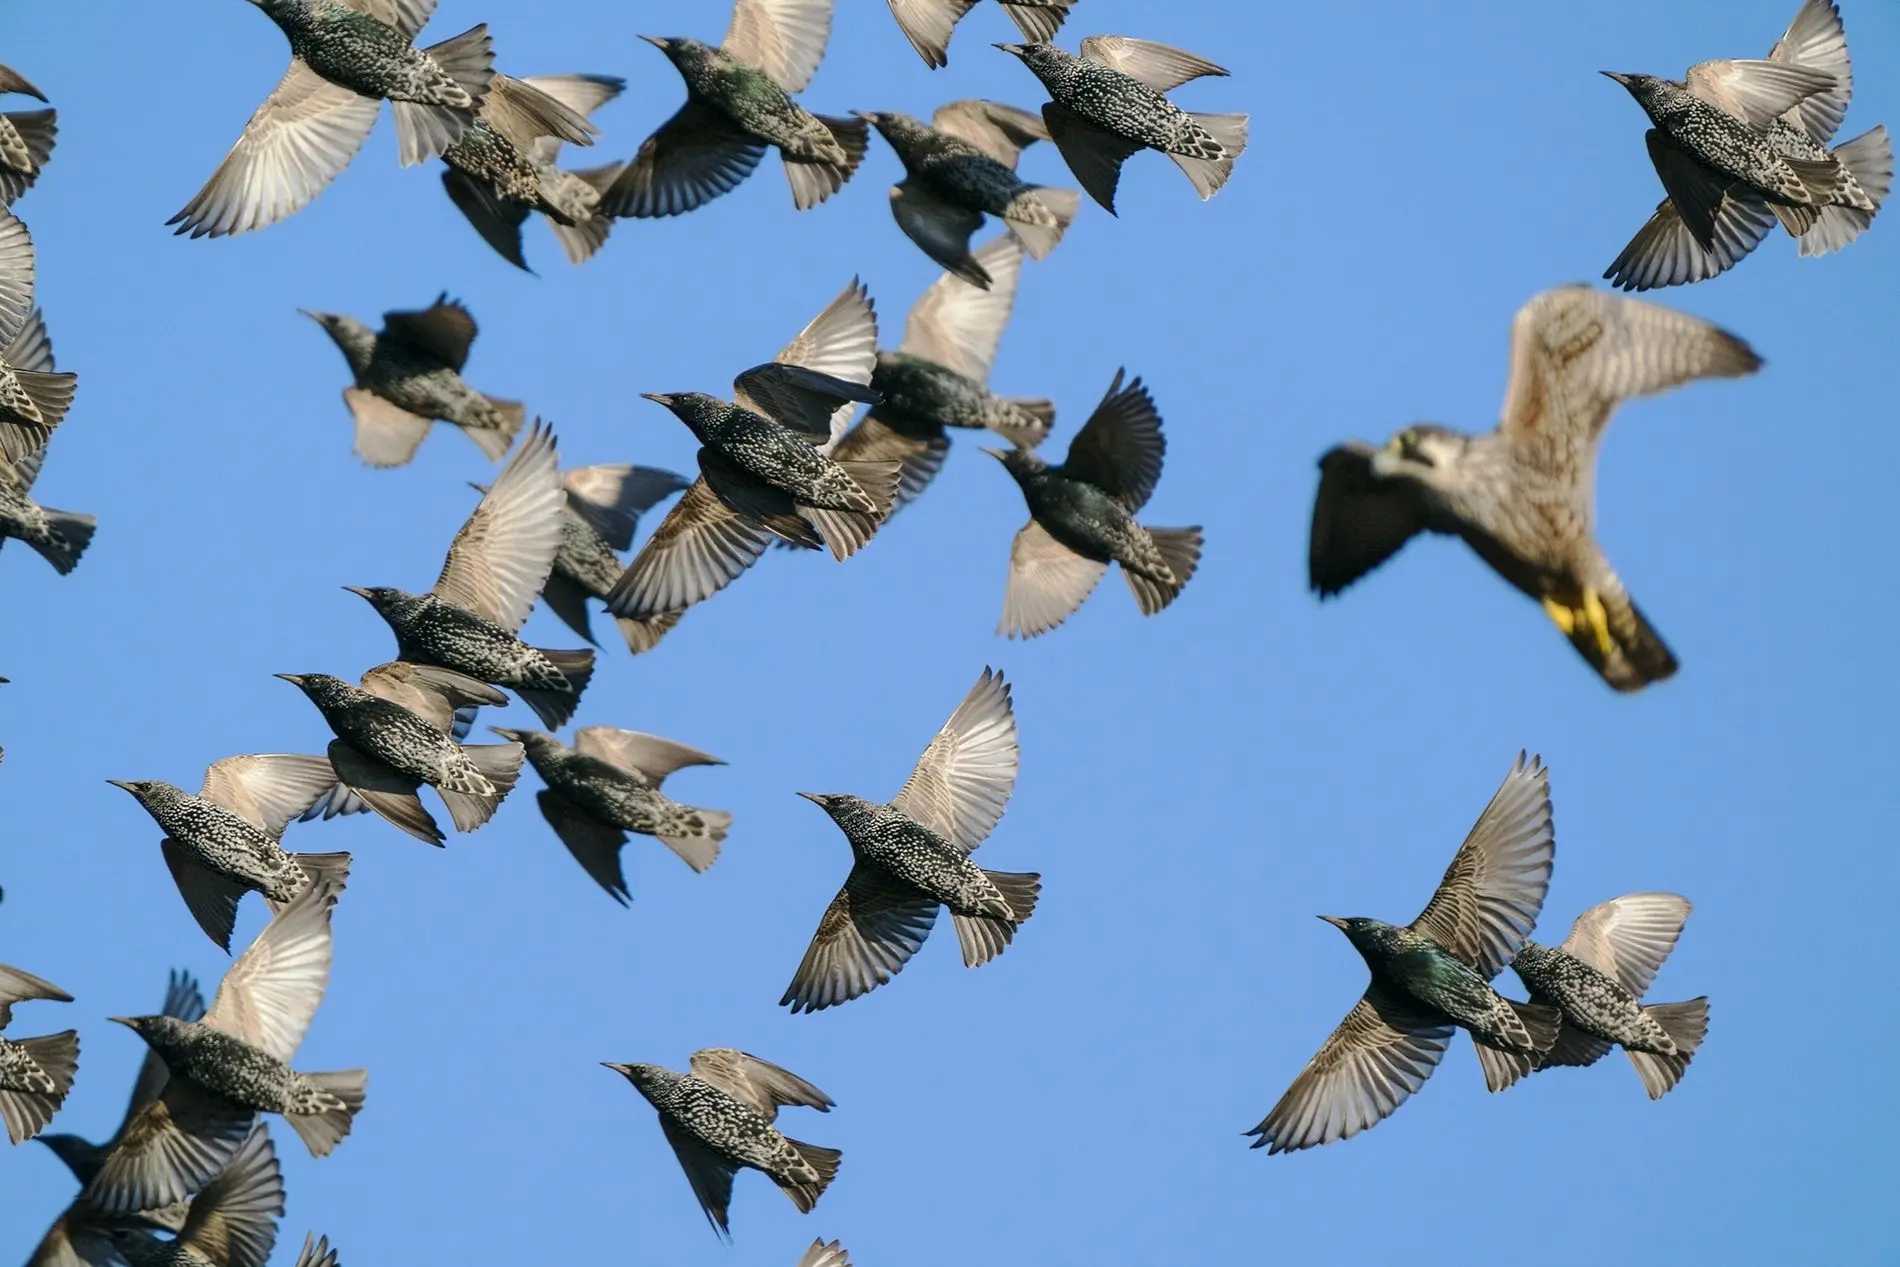 aves que vuelan en bandadas nombres - Cuántas aves son una bandada